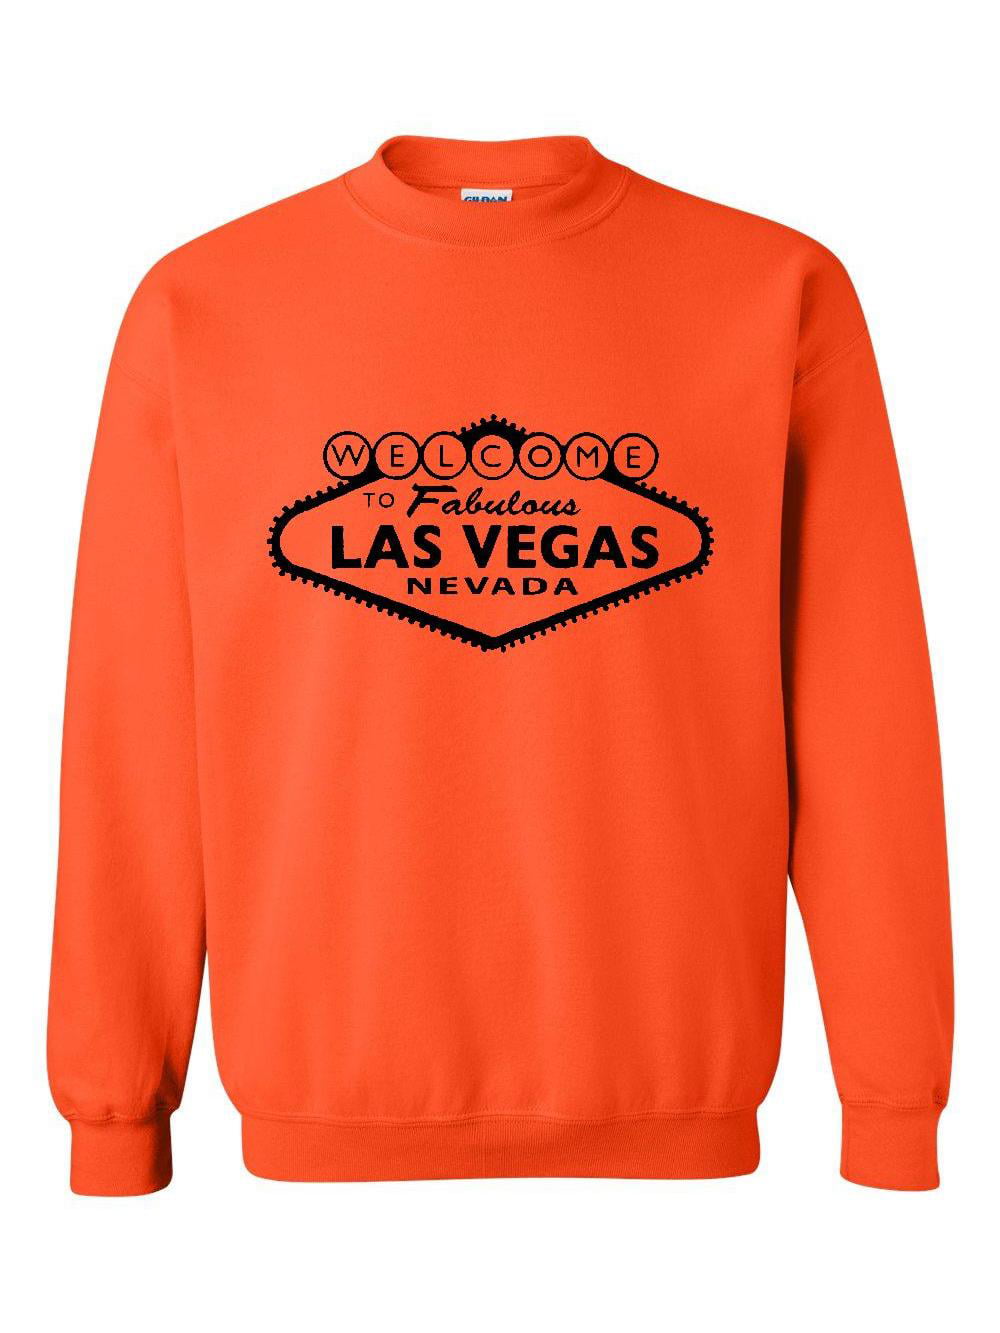 Las Vegas Sweatshirt Las Vegas Welcome to Las  